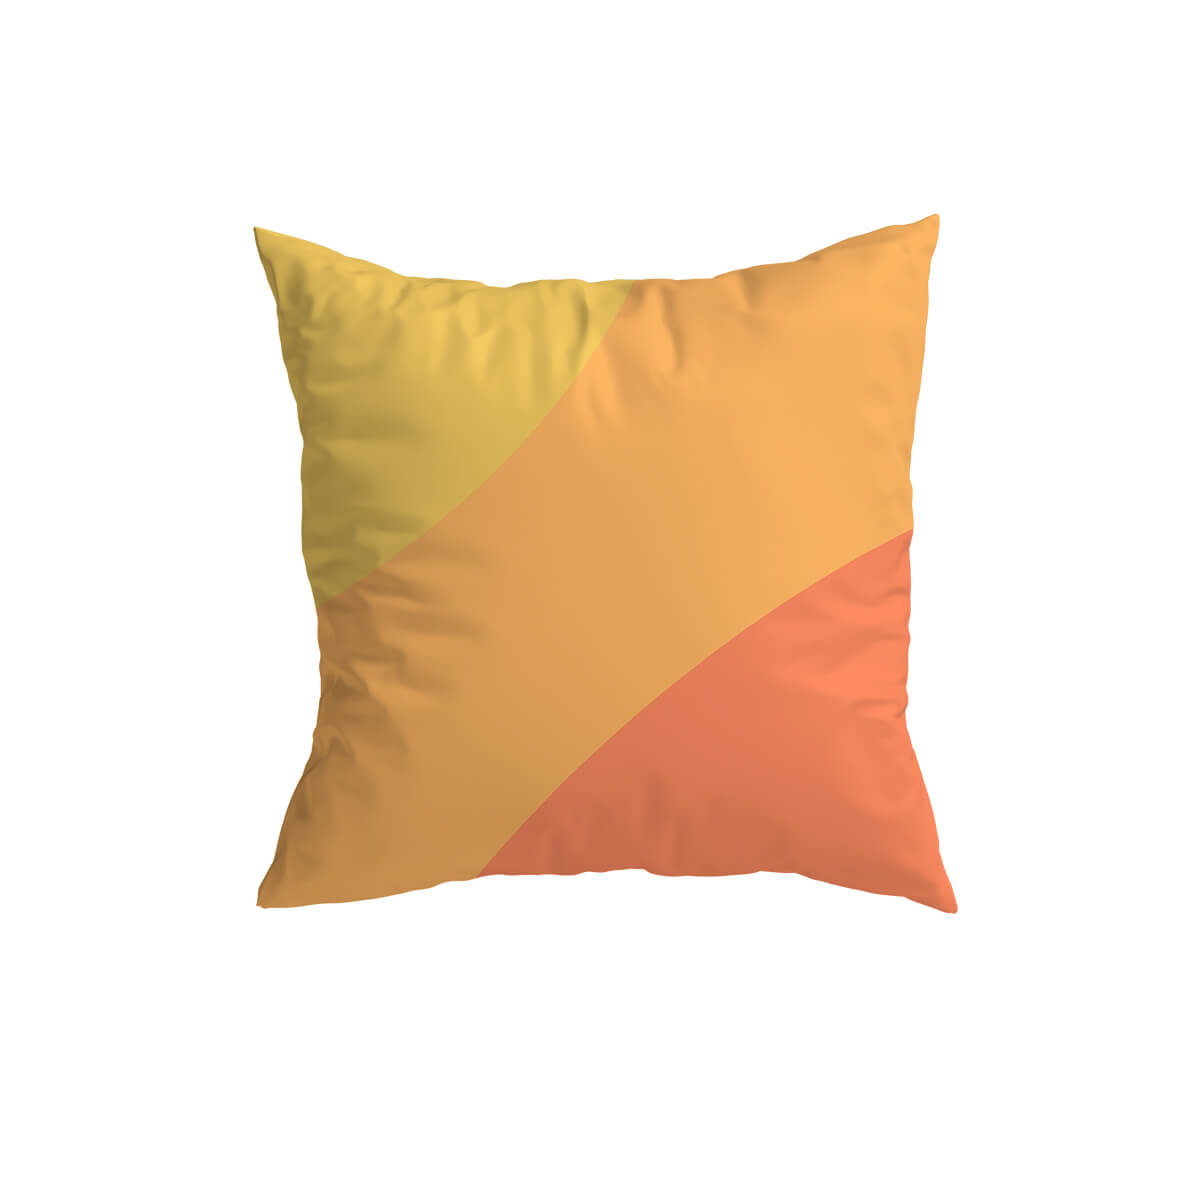 Nordic Sunshine Cushion Covers